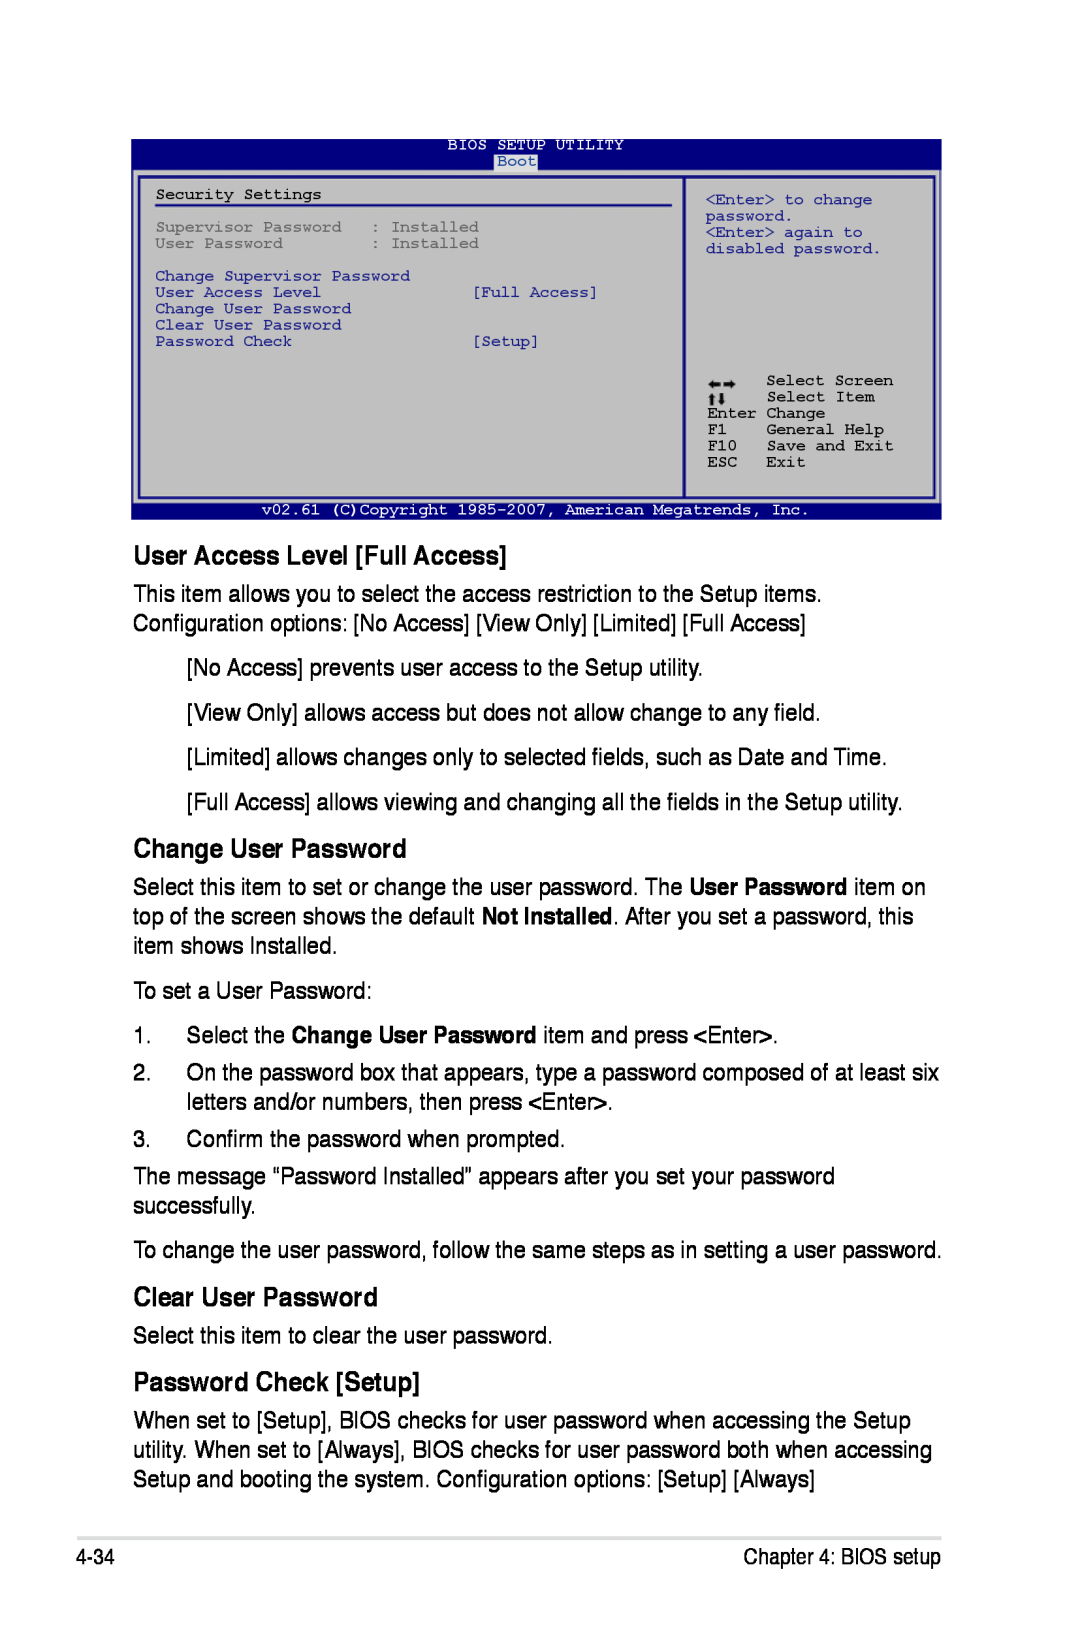 Asus P5K/EPU manual User Access Level Full Access, Change User Password, Clear User Password, Password Check Setup 